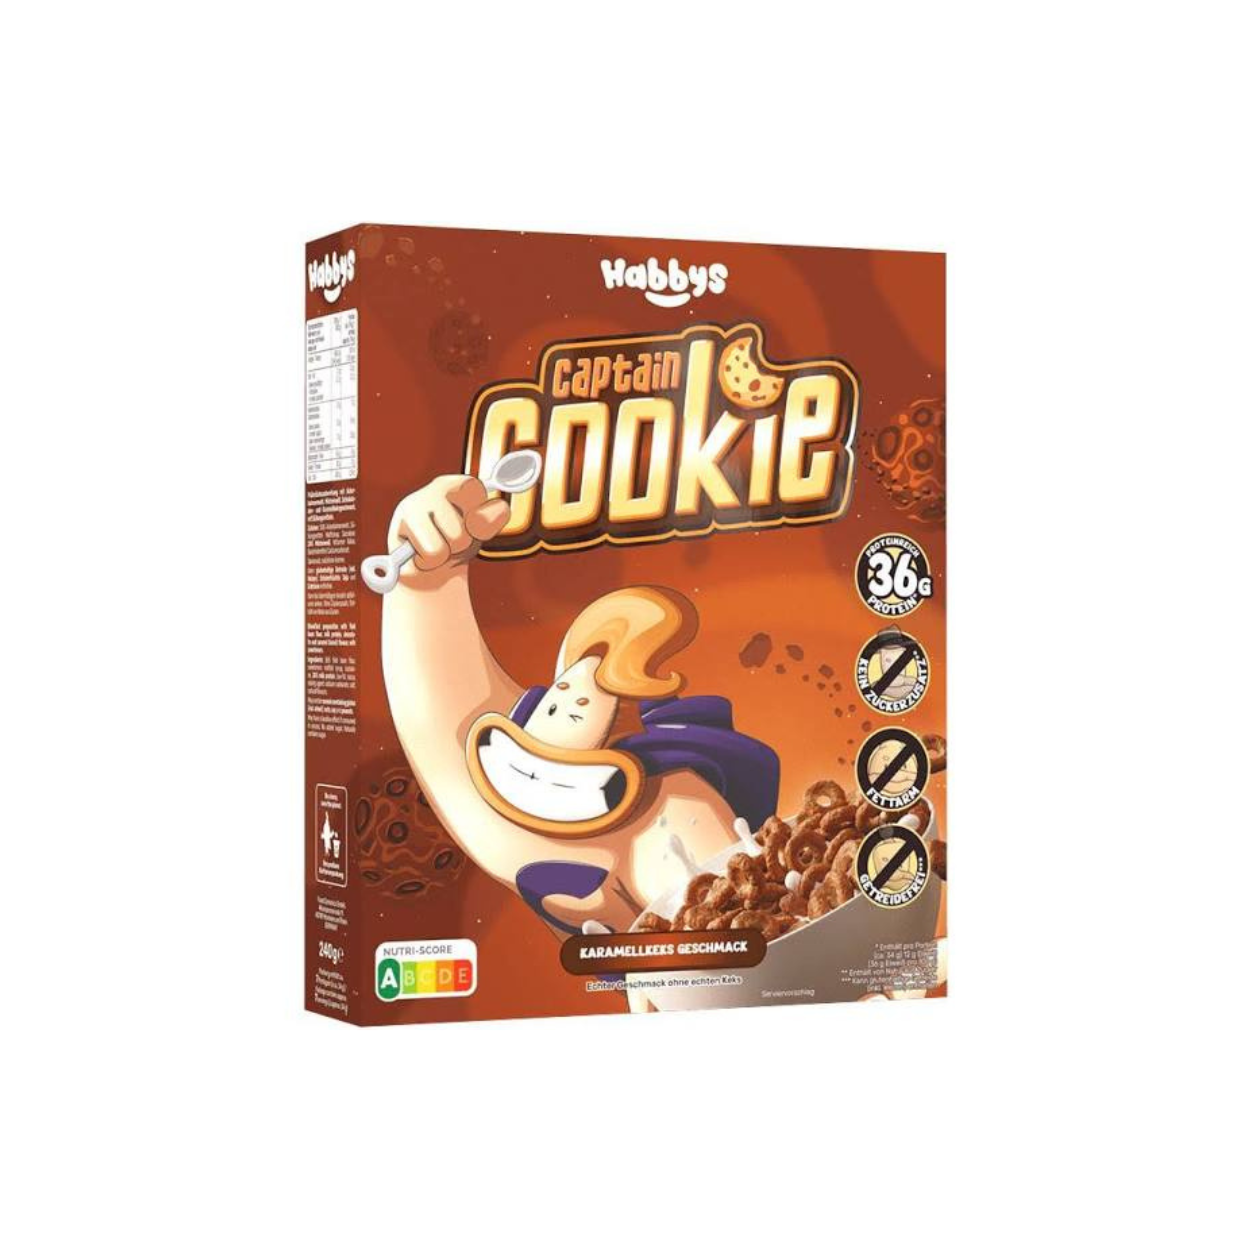 IP Nutrition Habbys Proteincereals Captain Cookie (240g)